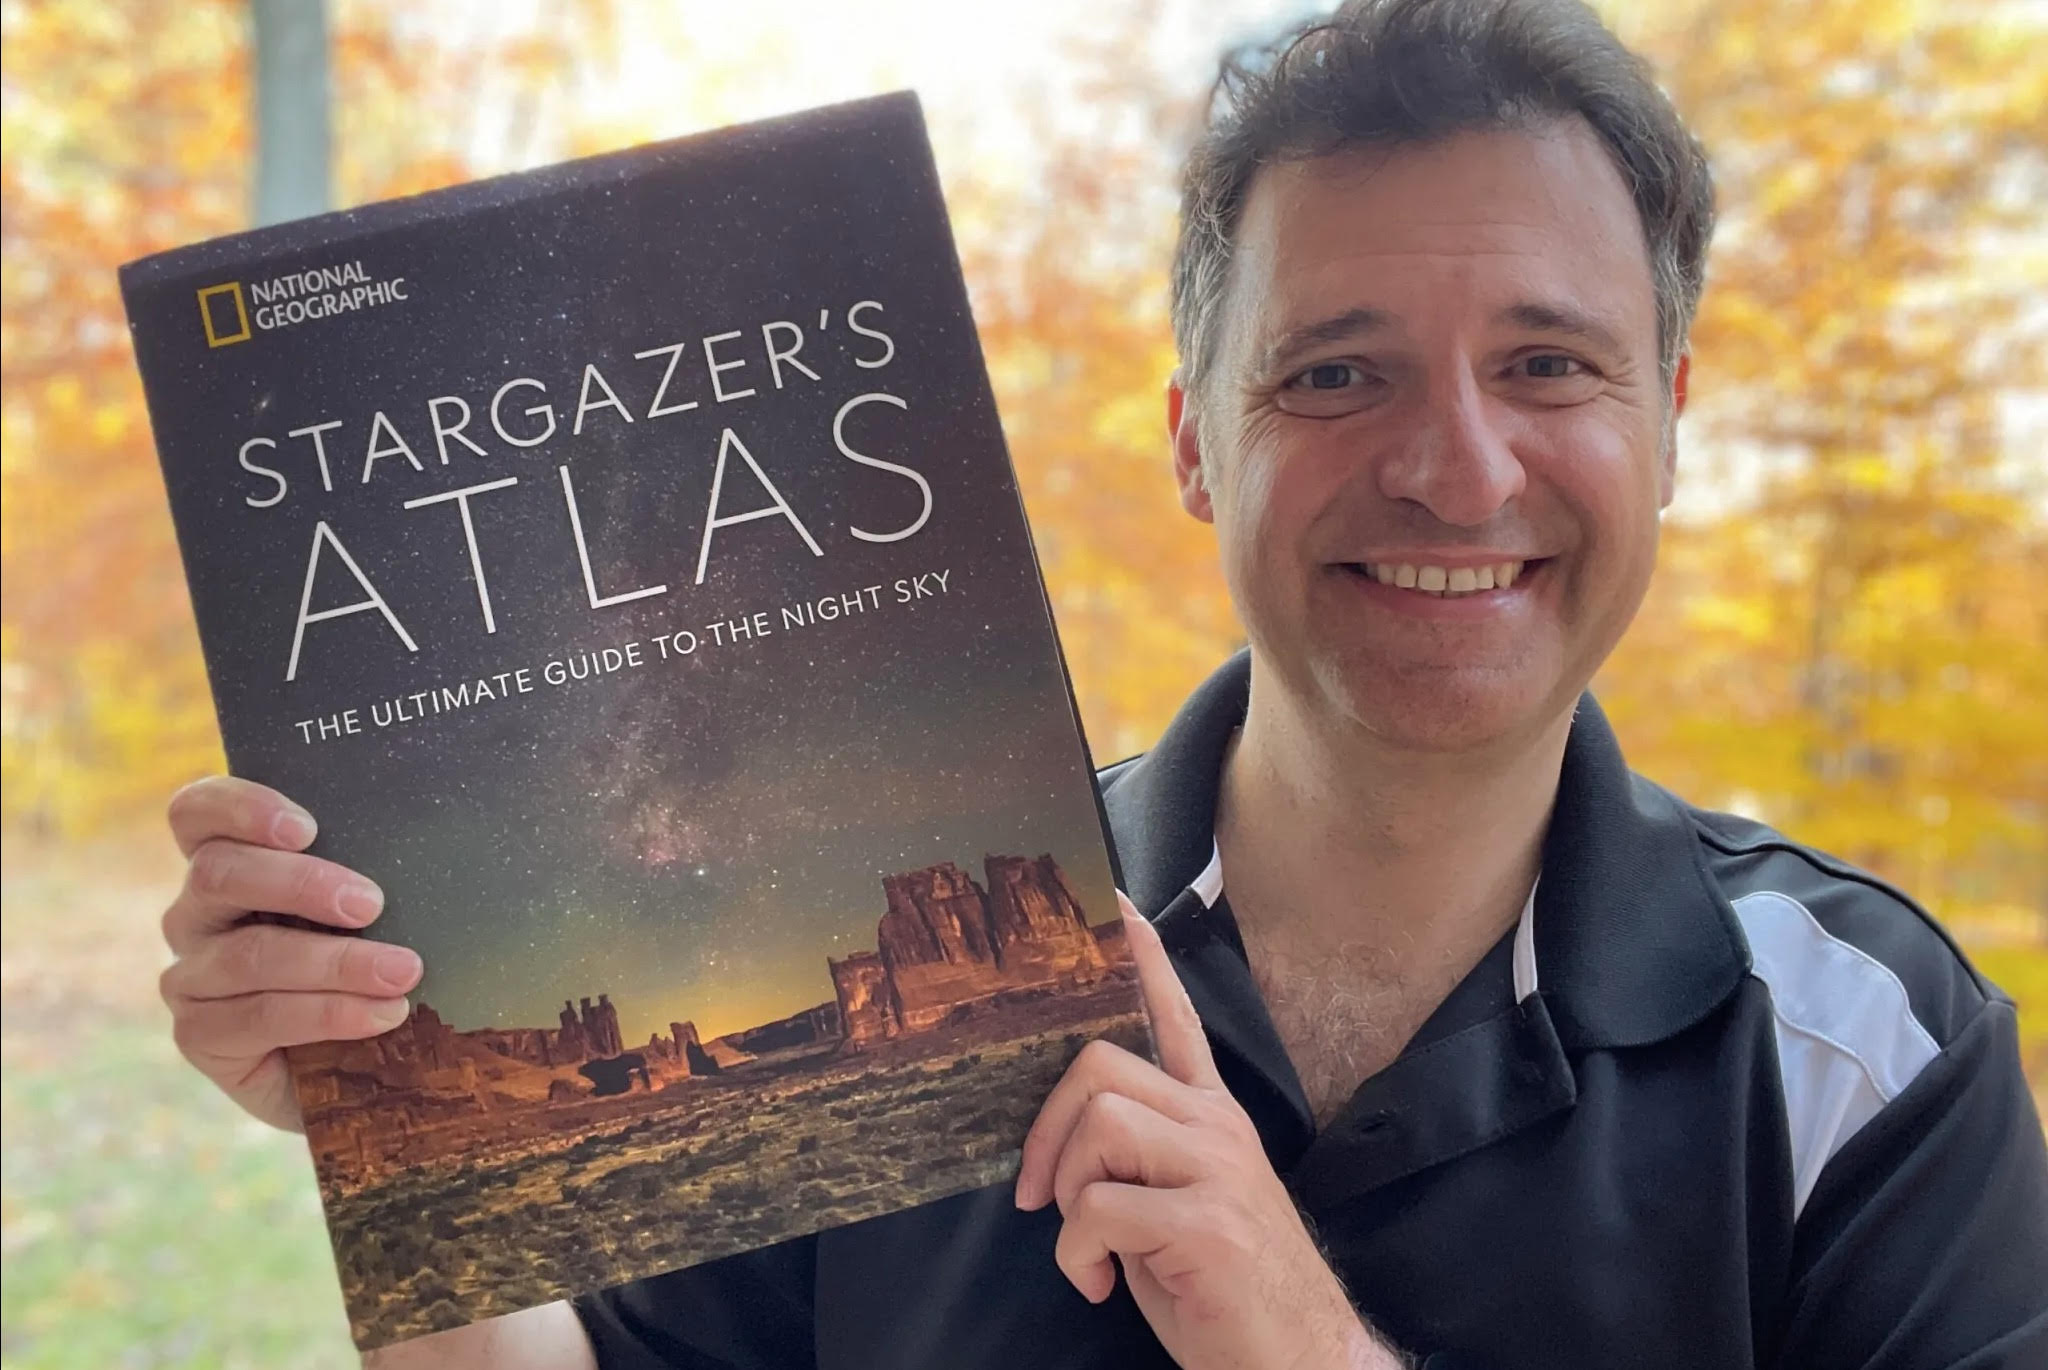 Stargazer's Atlas: The Ultimate Guide to the Night Sky